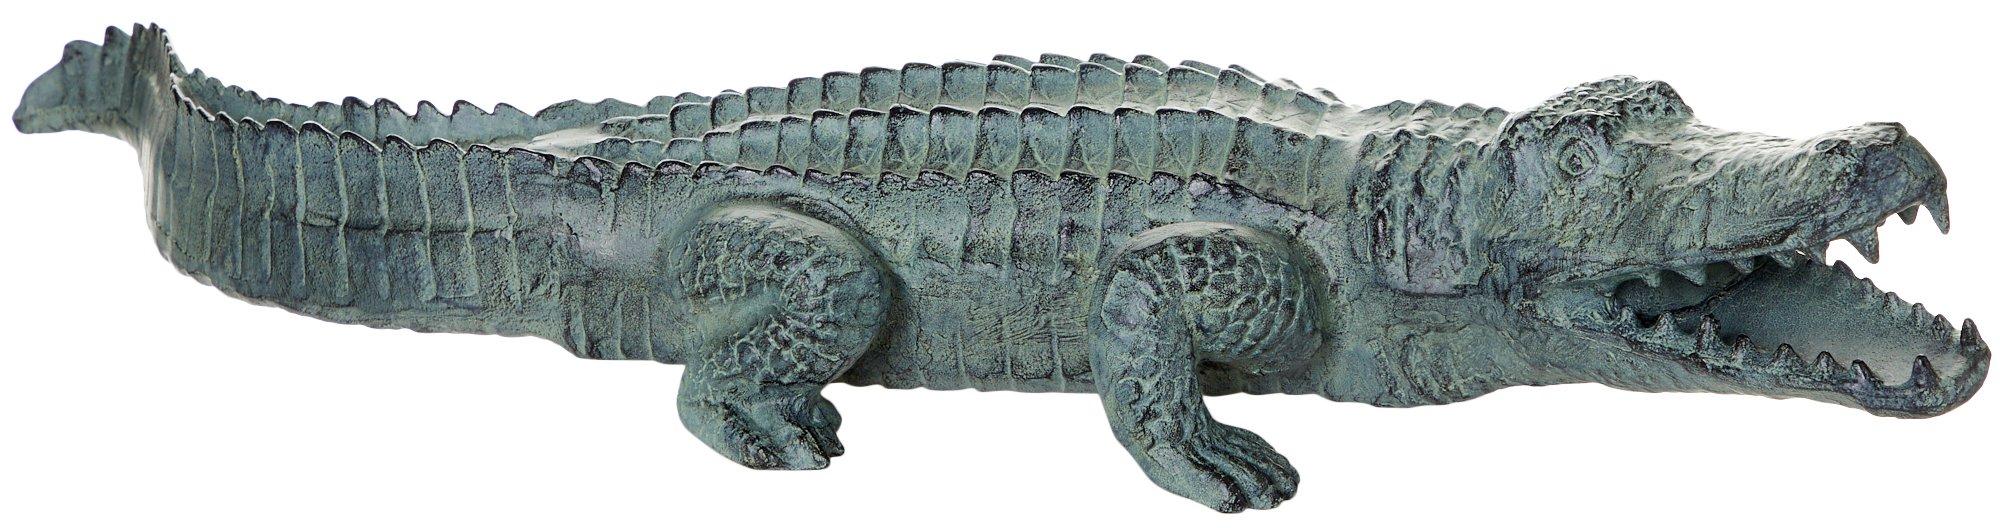 San Pacific Alligator Sculpture